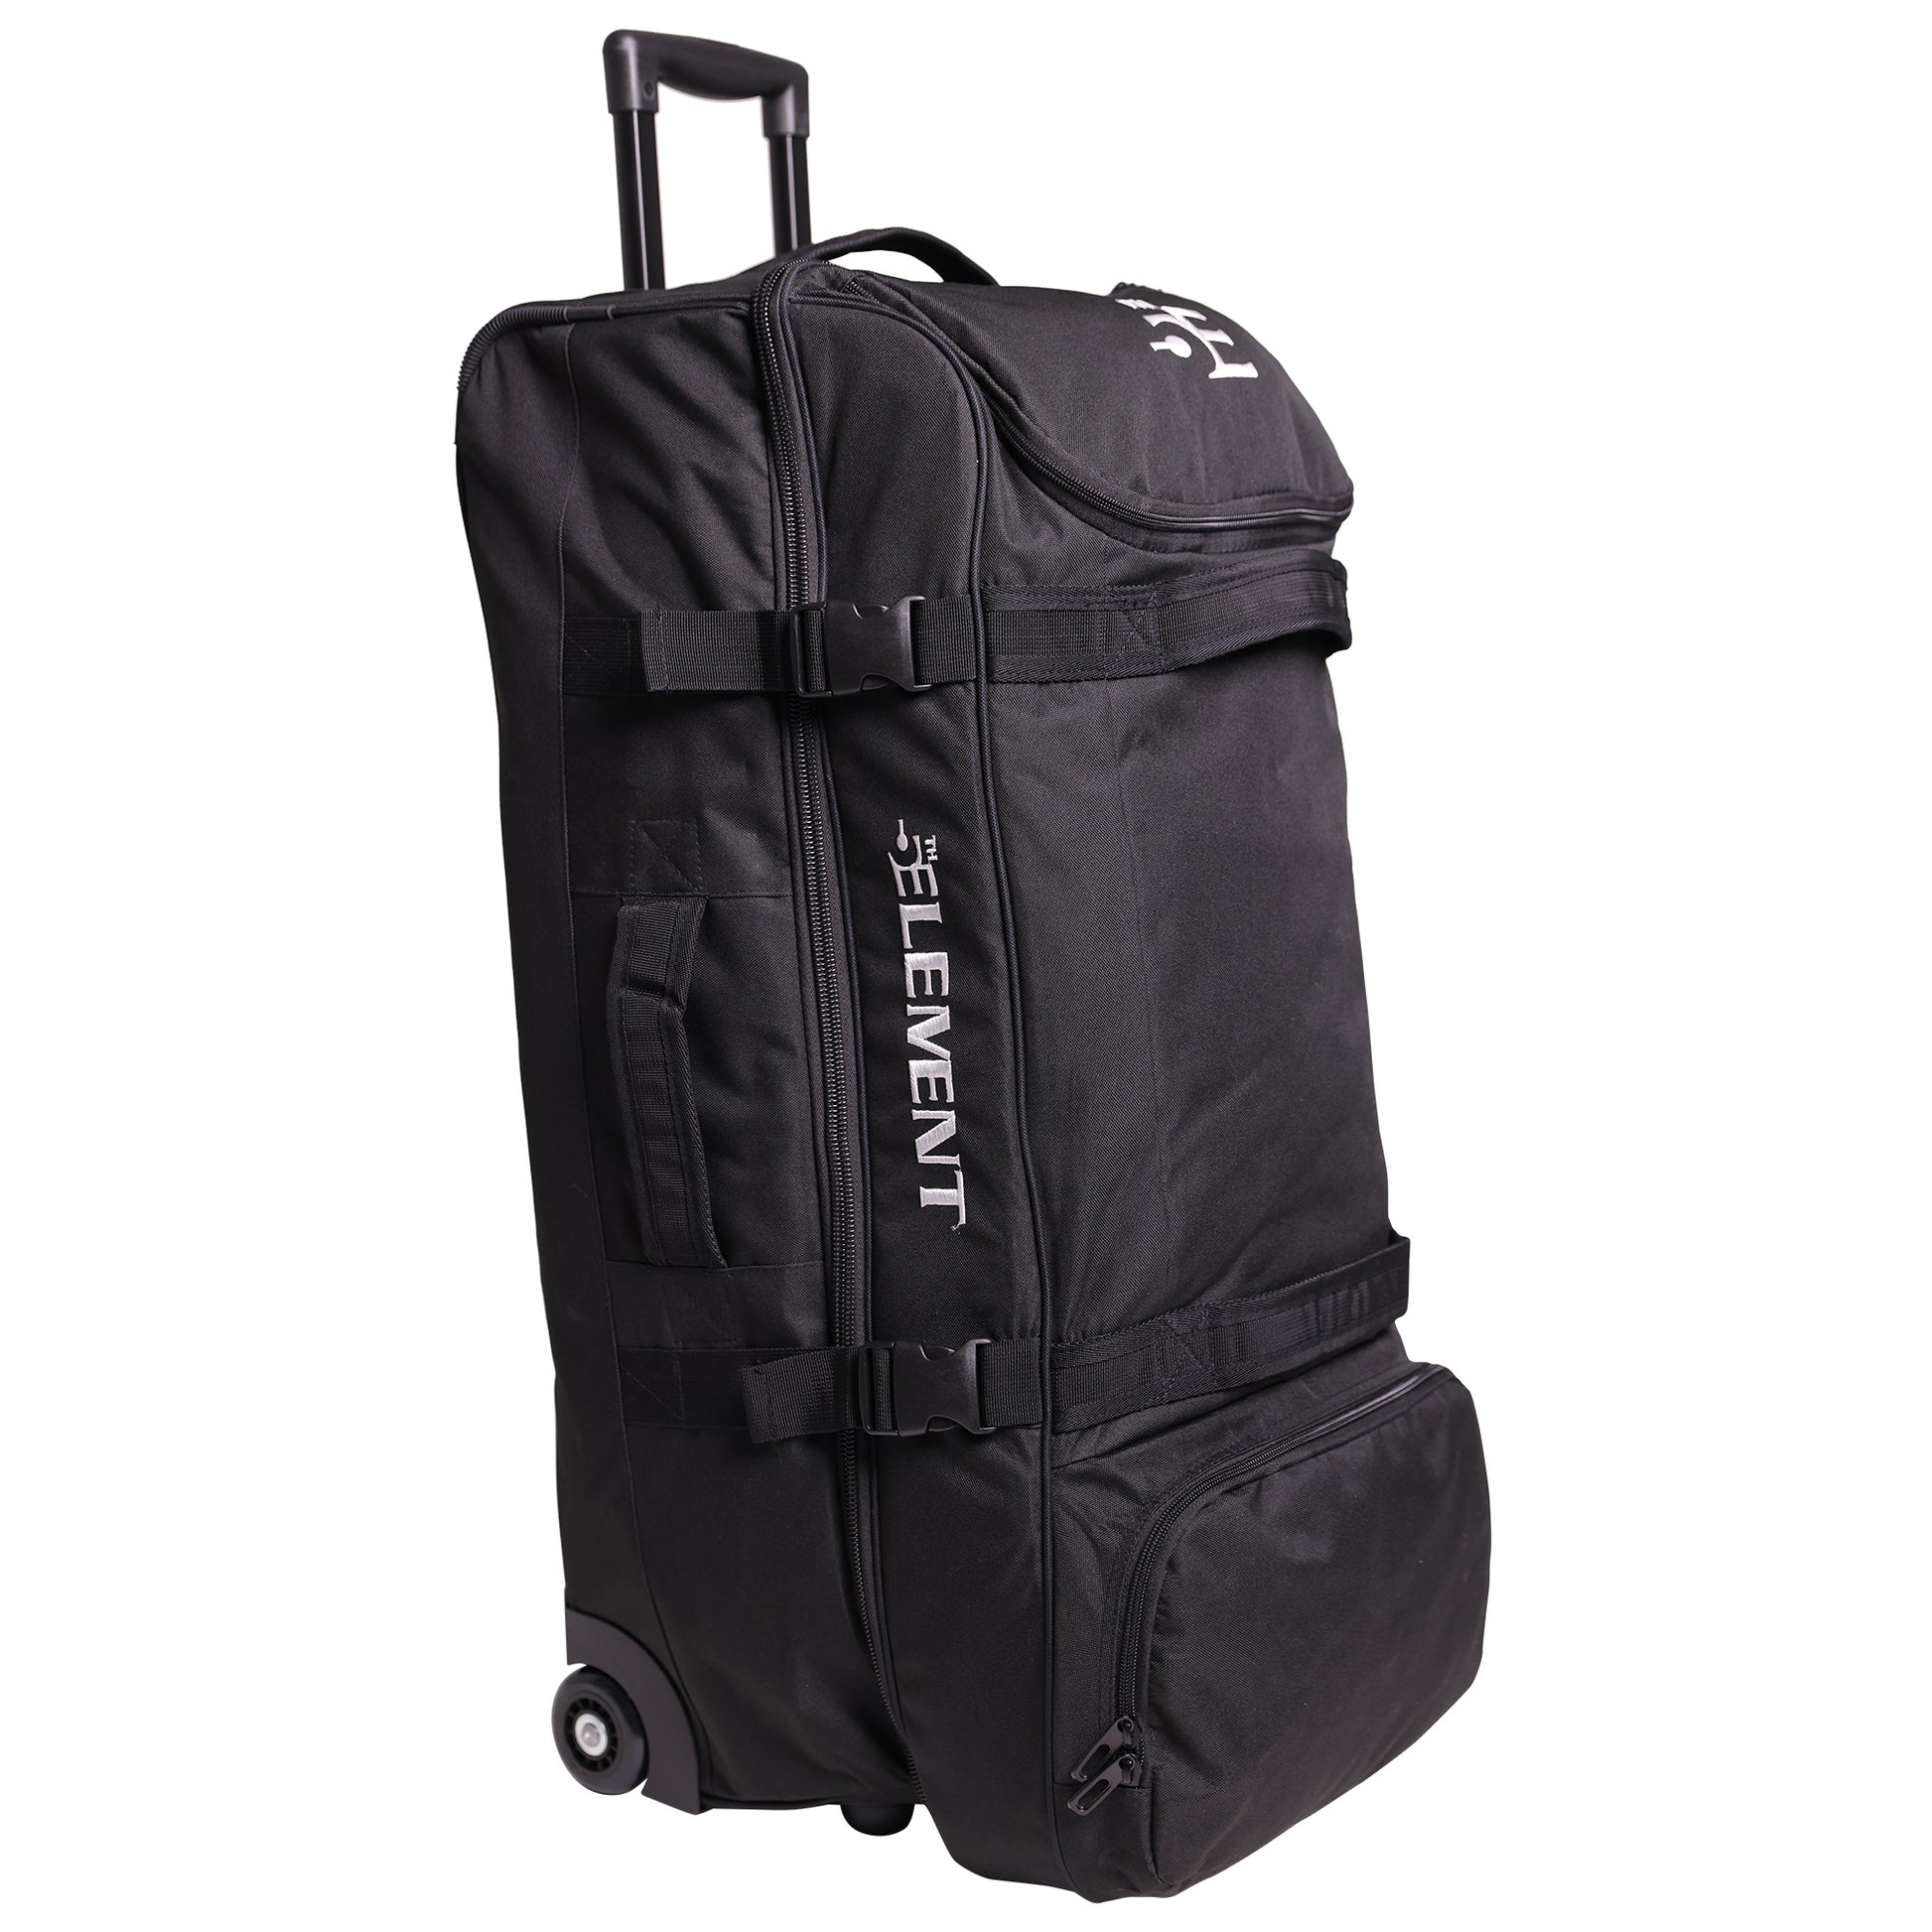 5th Element 100L Luggage Bag - Side